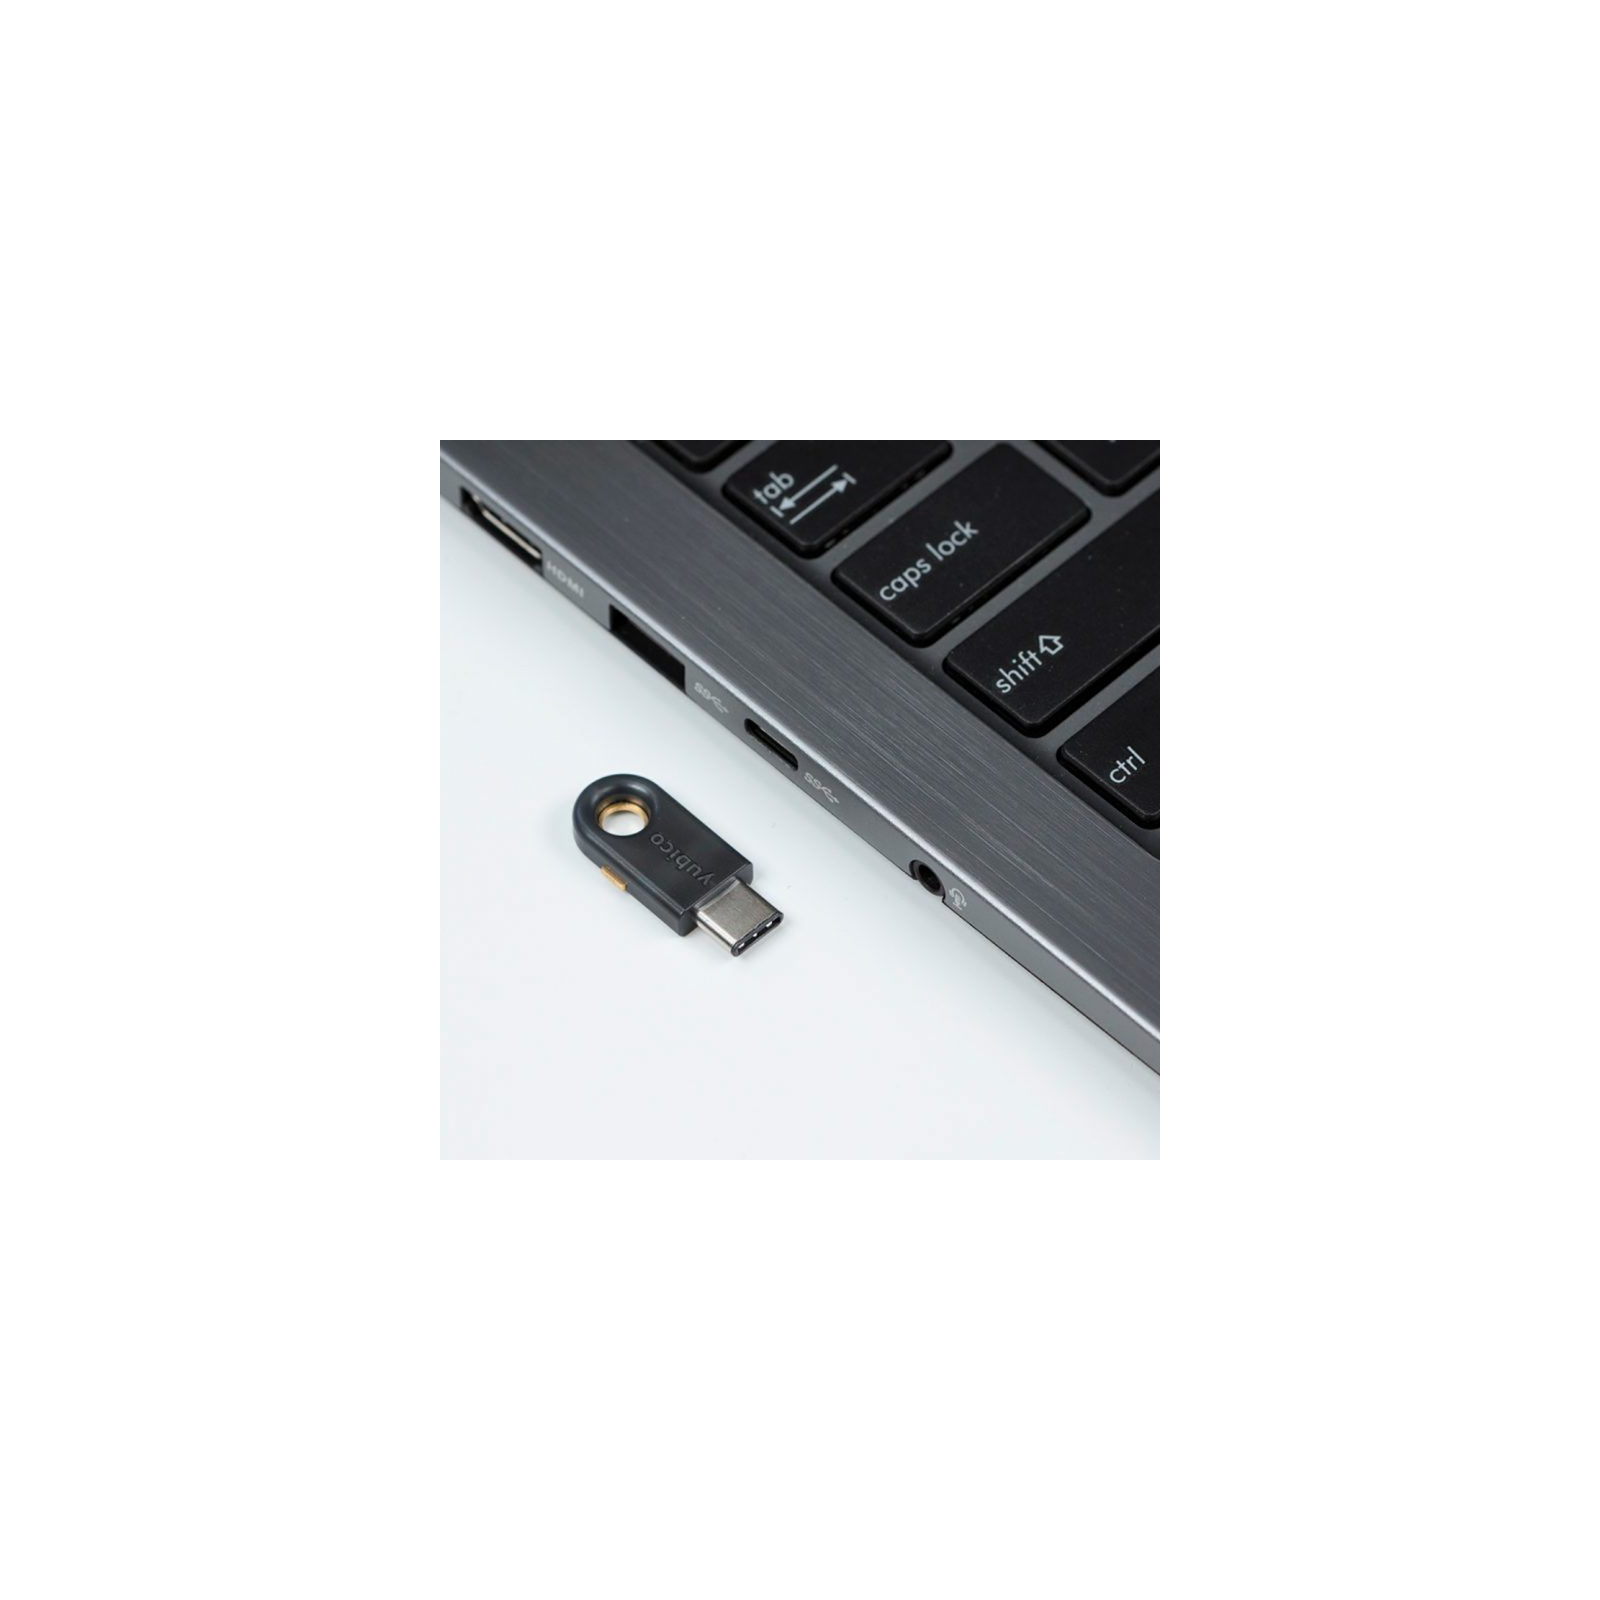 Аппаратный ключ безопасности Yubico YubiKey 5C (YubiKey_5C) изображение 4